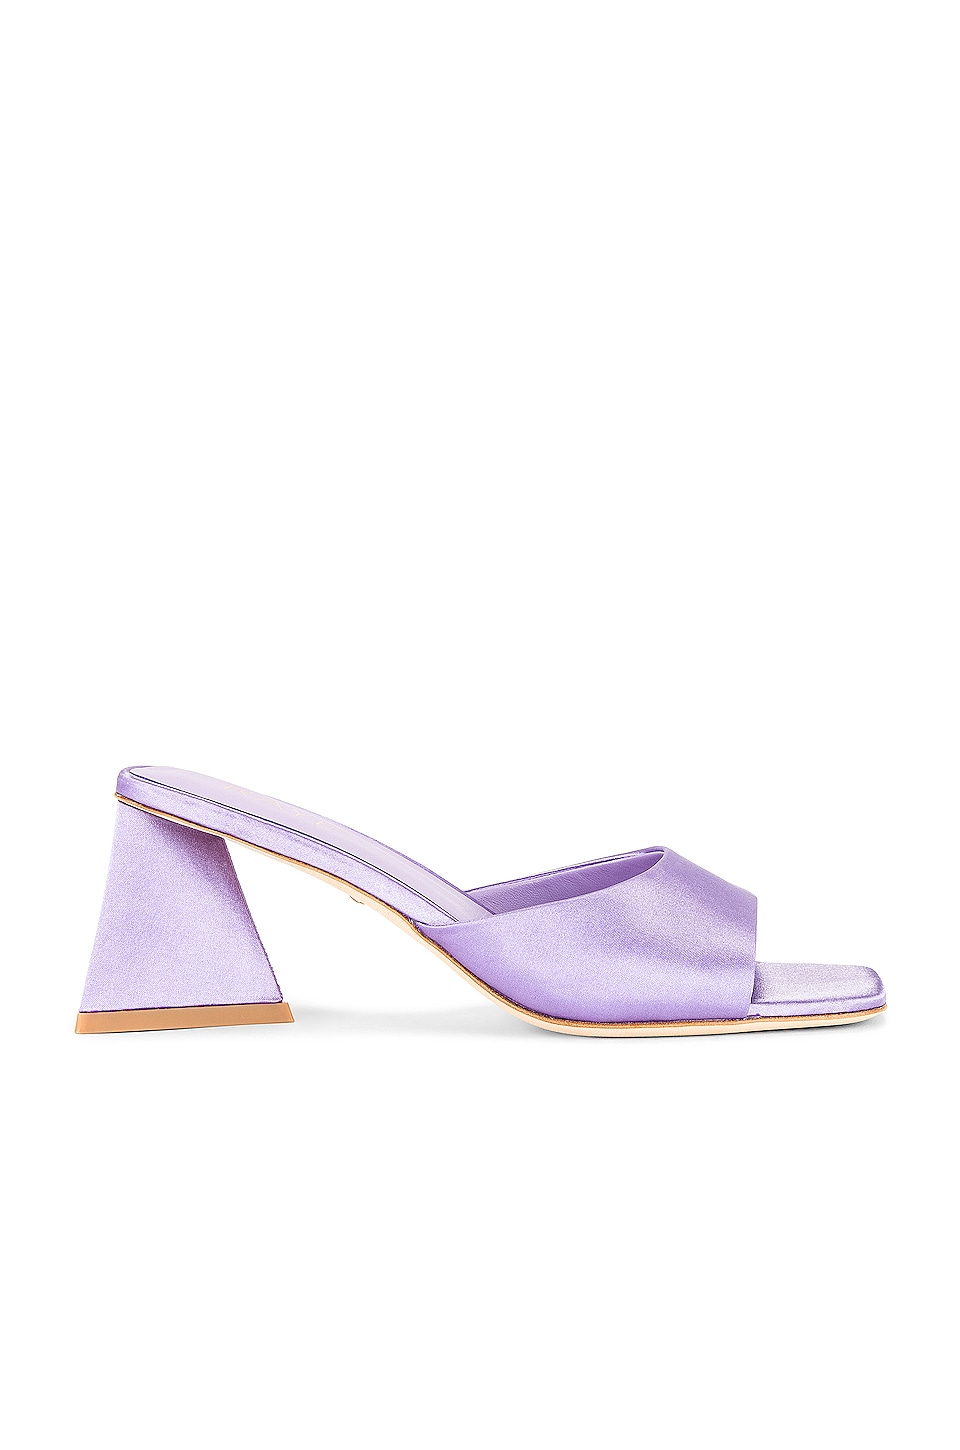 Lilac slide sandal with block heel